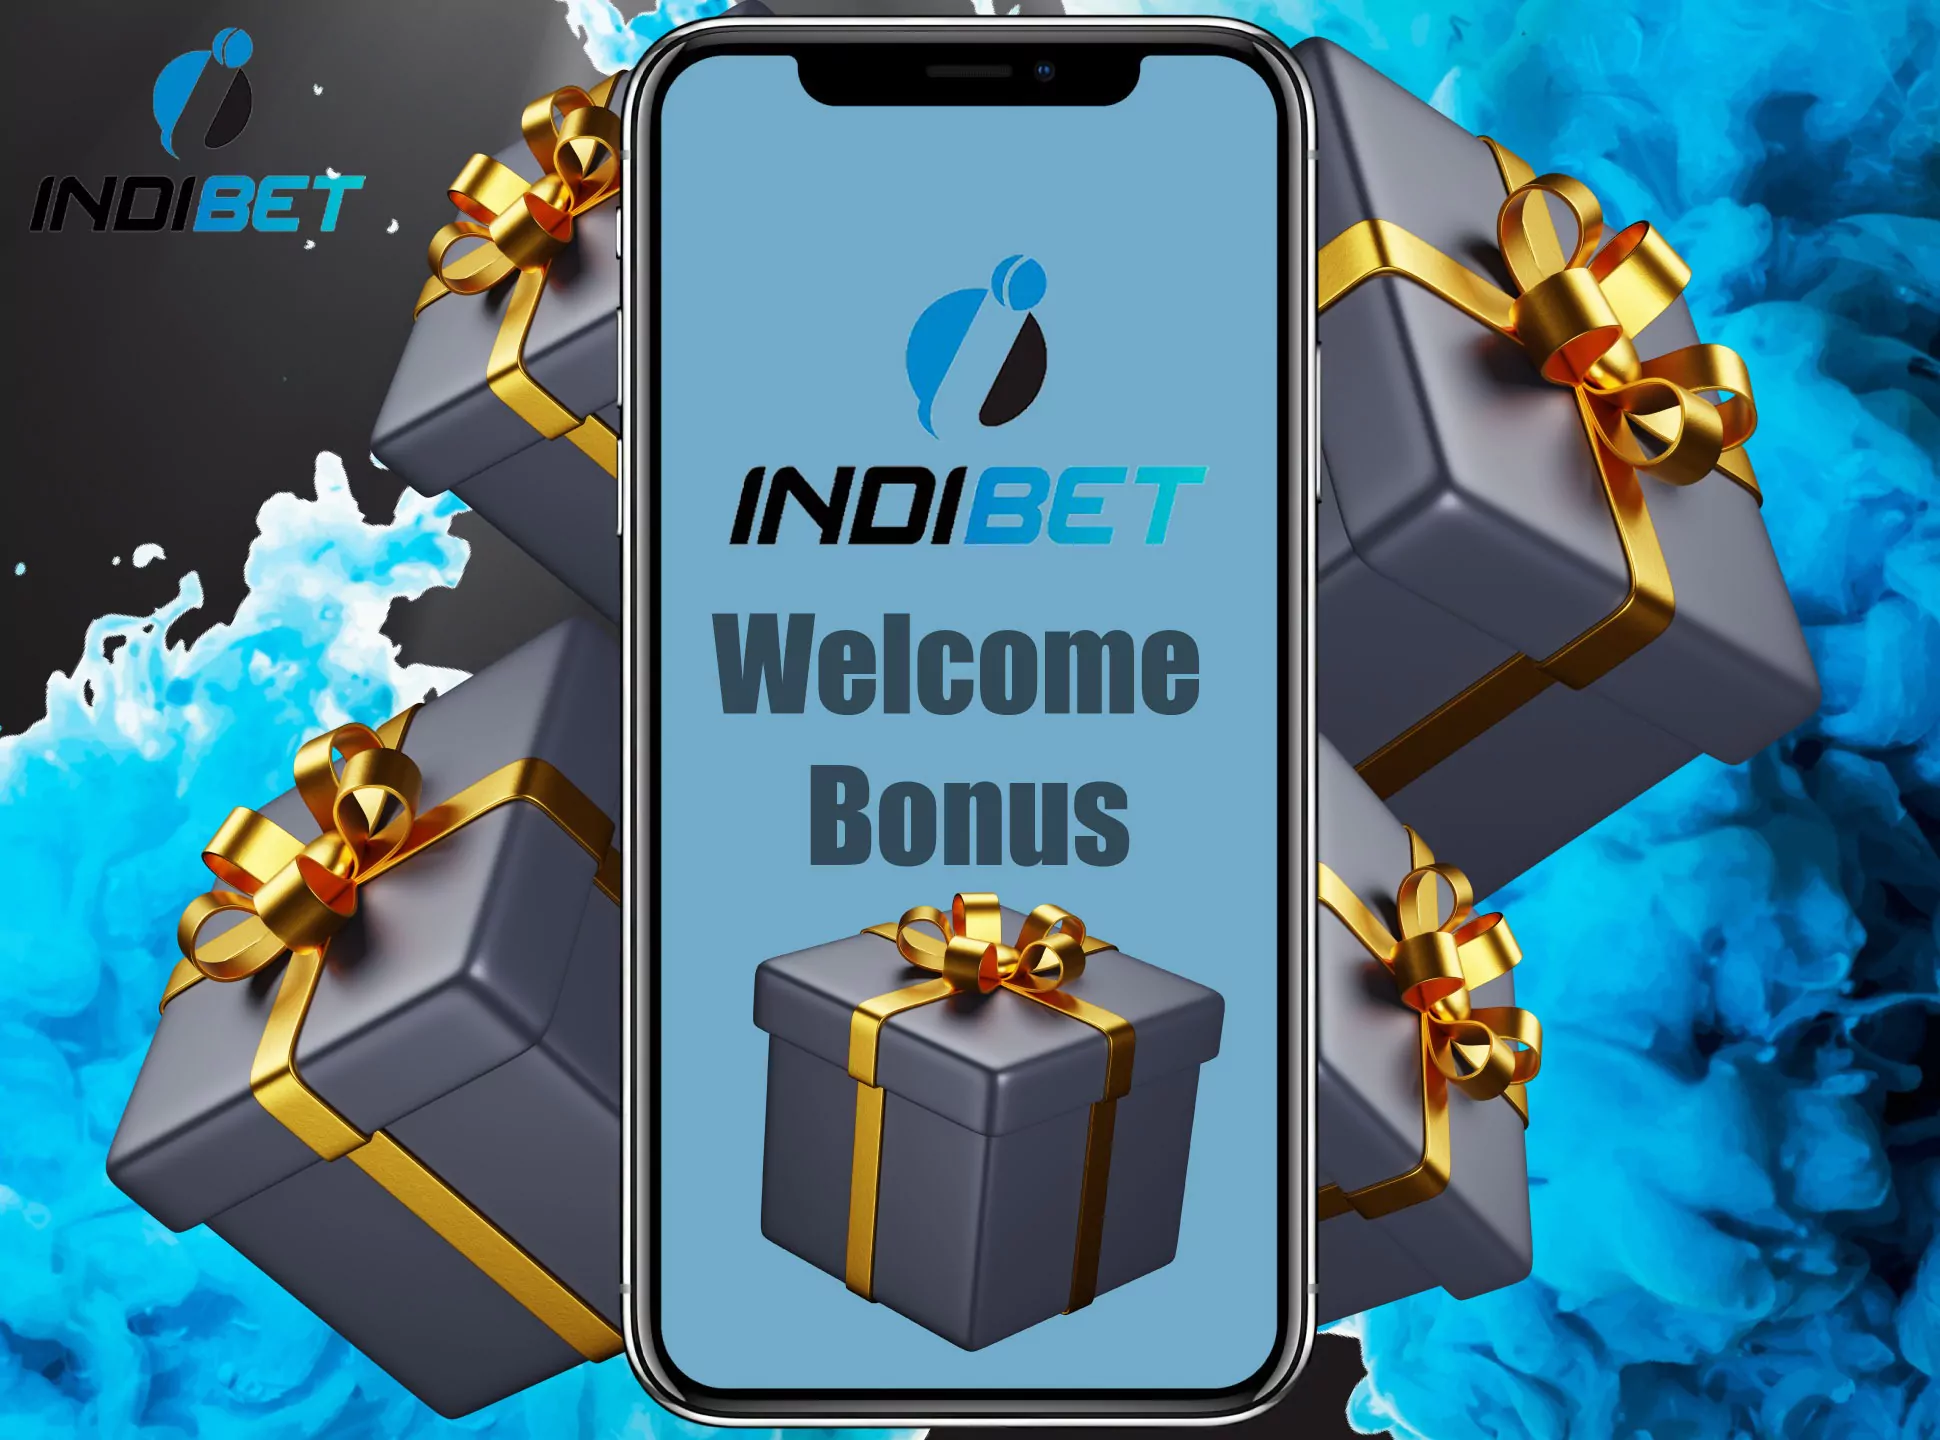 Get your welcome bonus after first deposit in the Indibet App.